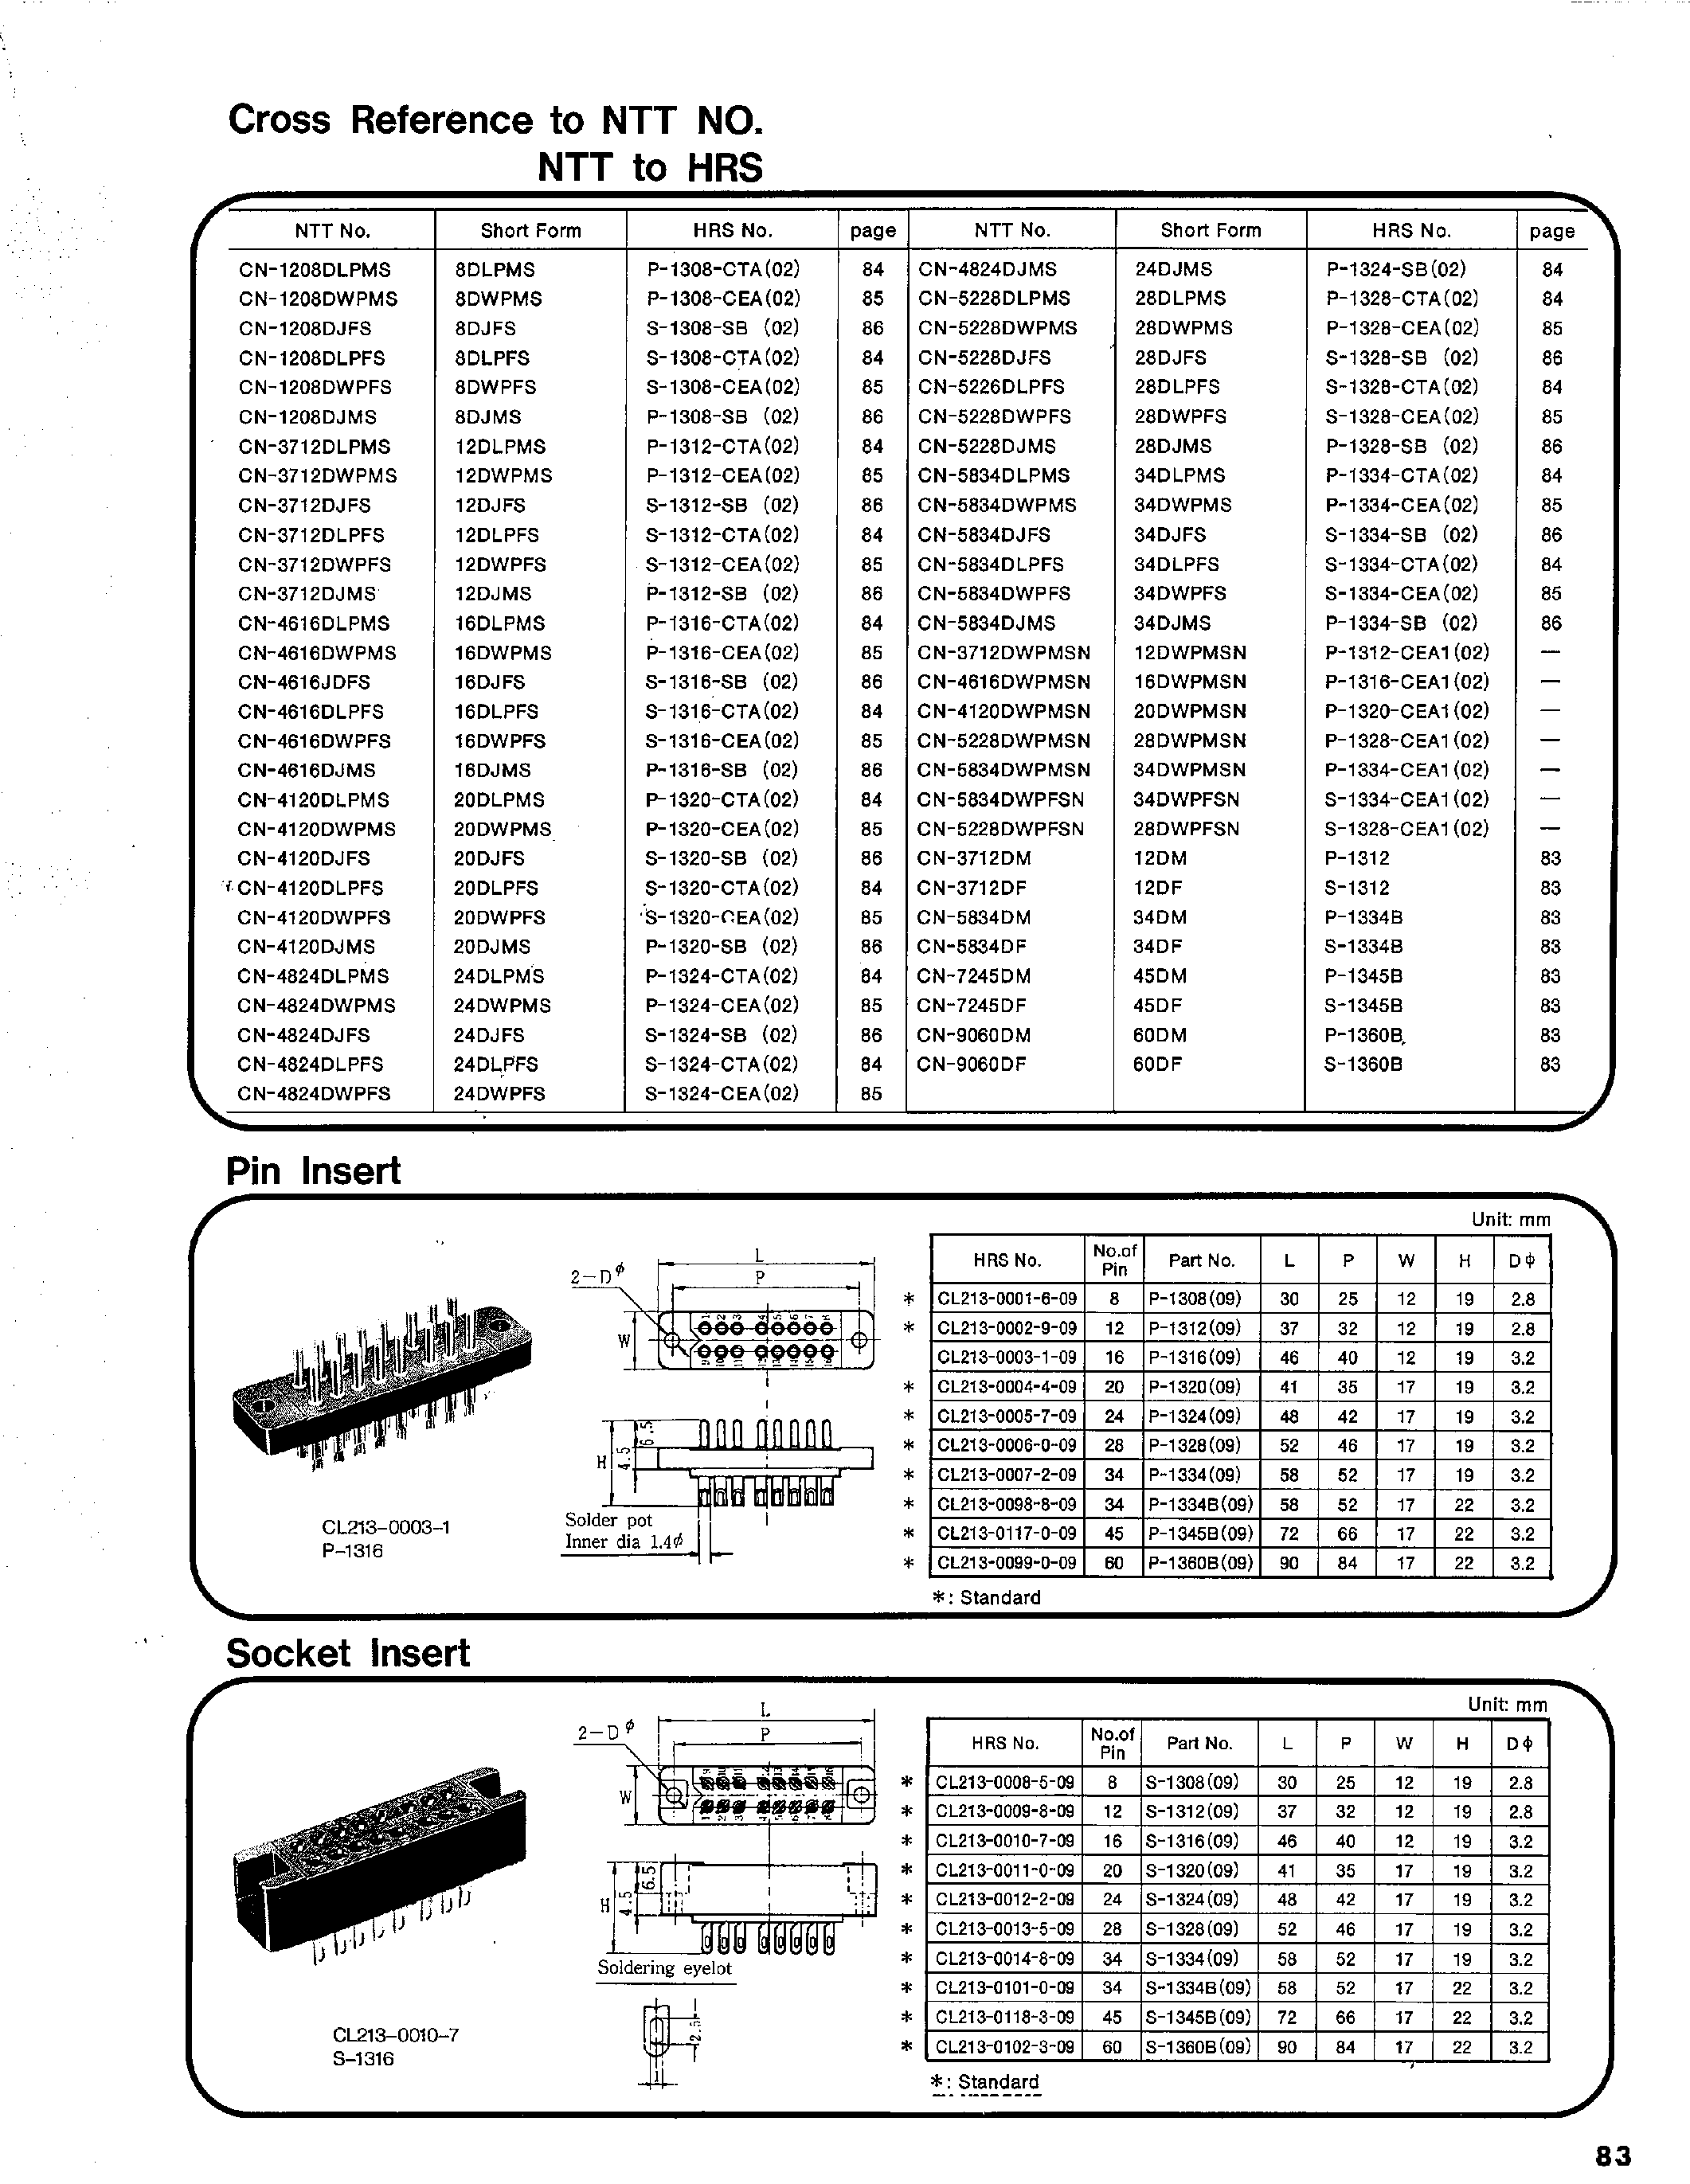 Datasheet P-1334-CE - 1300 SERIES RECTANGULAR CONNECTORS page 2